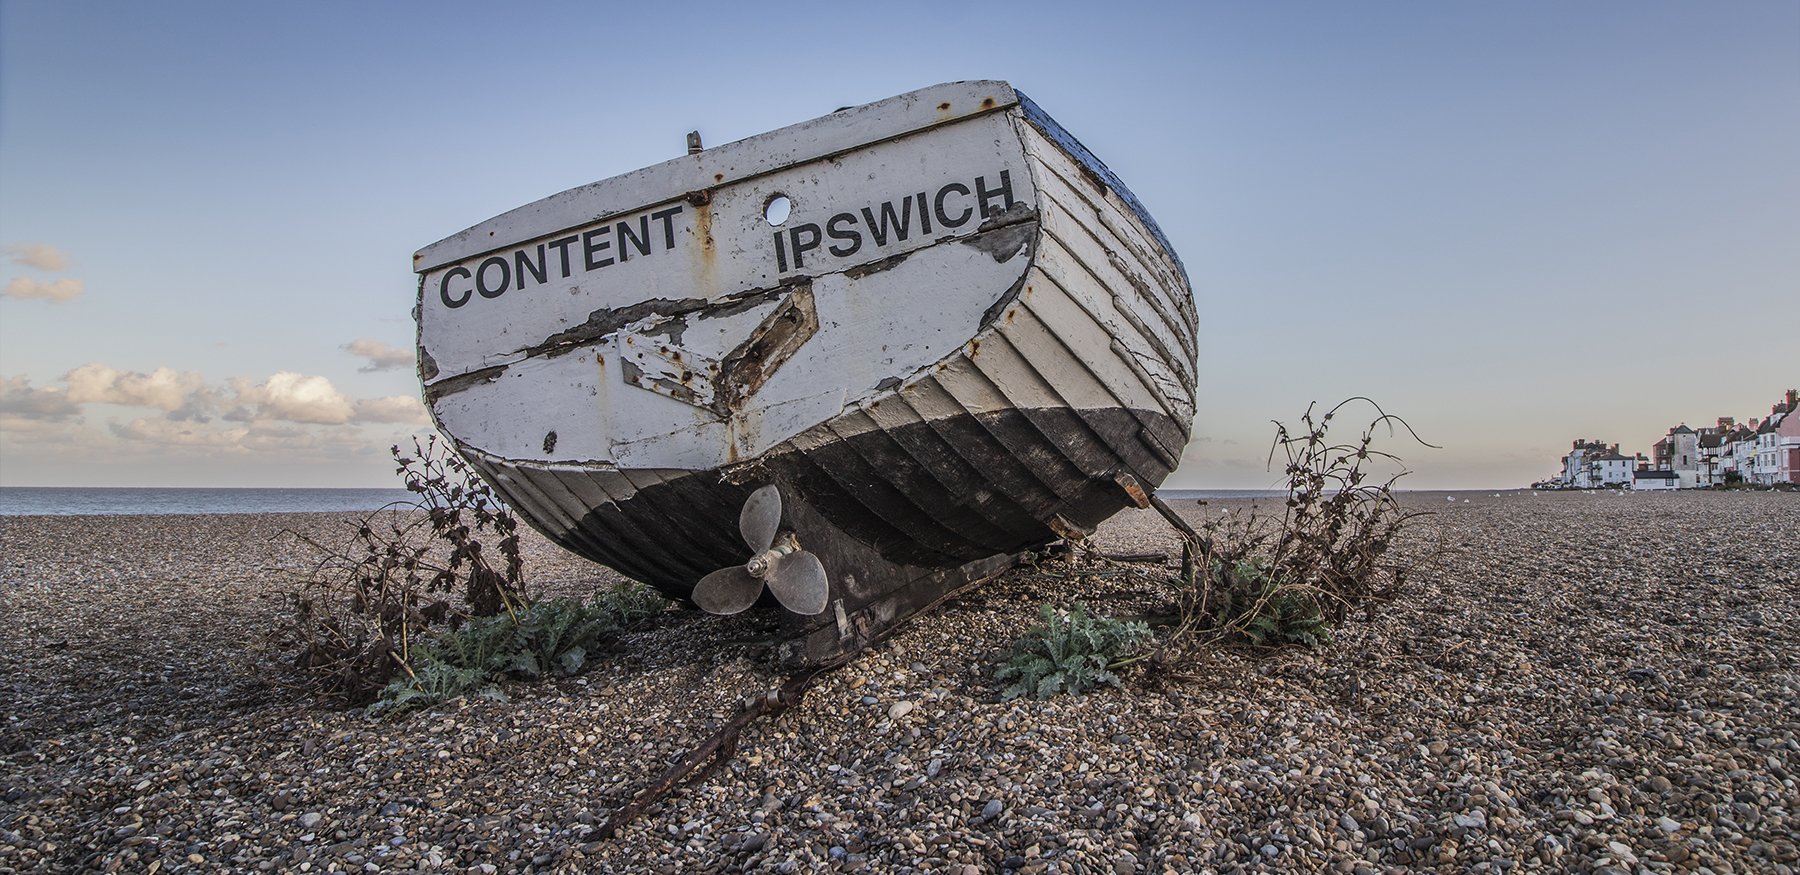 Content Ipswich Boat Aldeburgh 1800 x 875.jpg